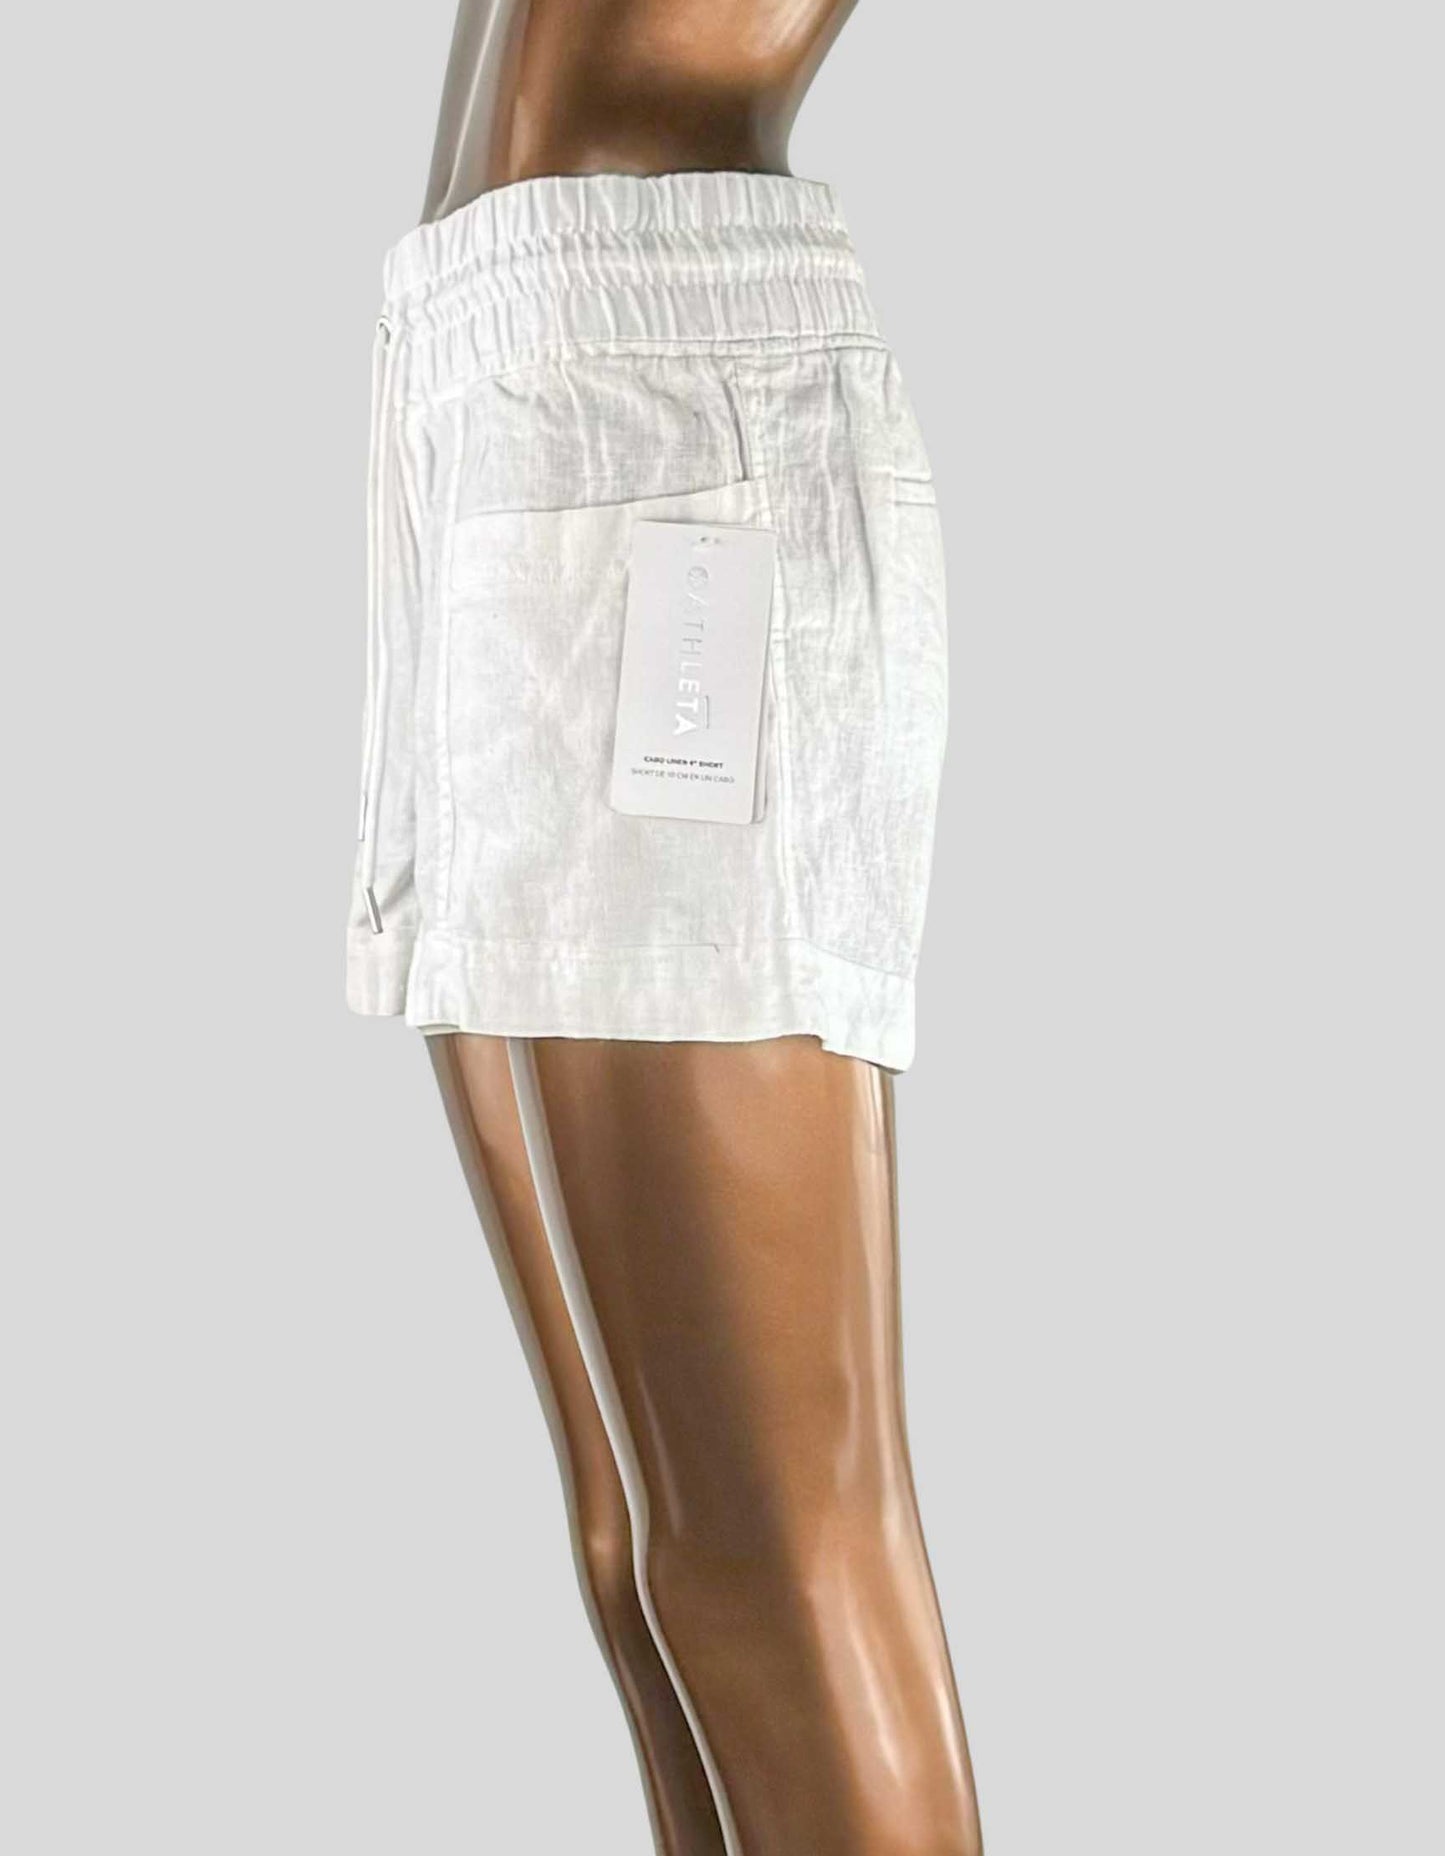 ATHLETA Linen 4" Shorts w/ Tags - 4 US